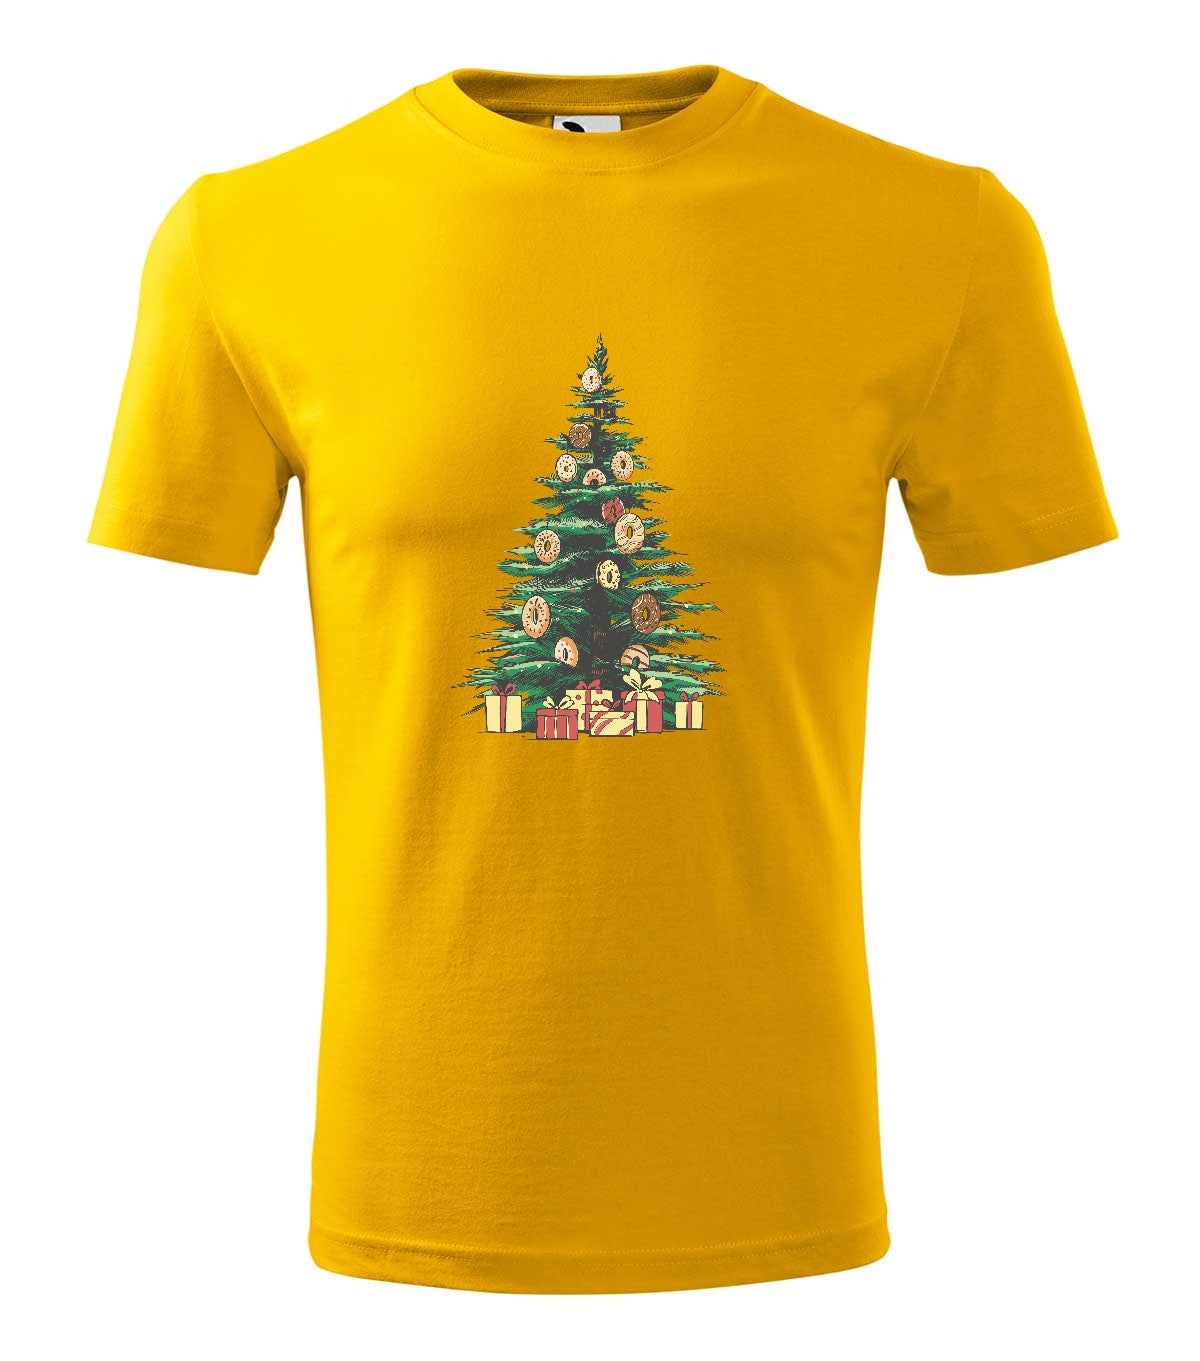 Christmas Tree with Presents férfi technikai póló